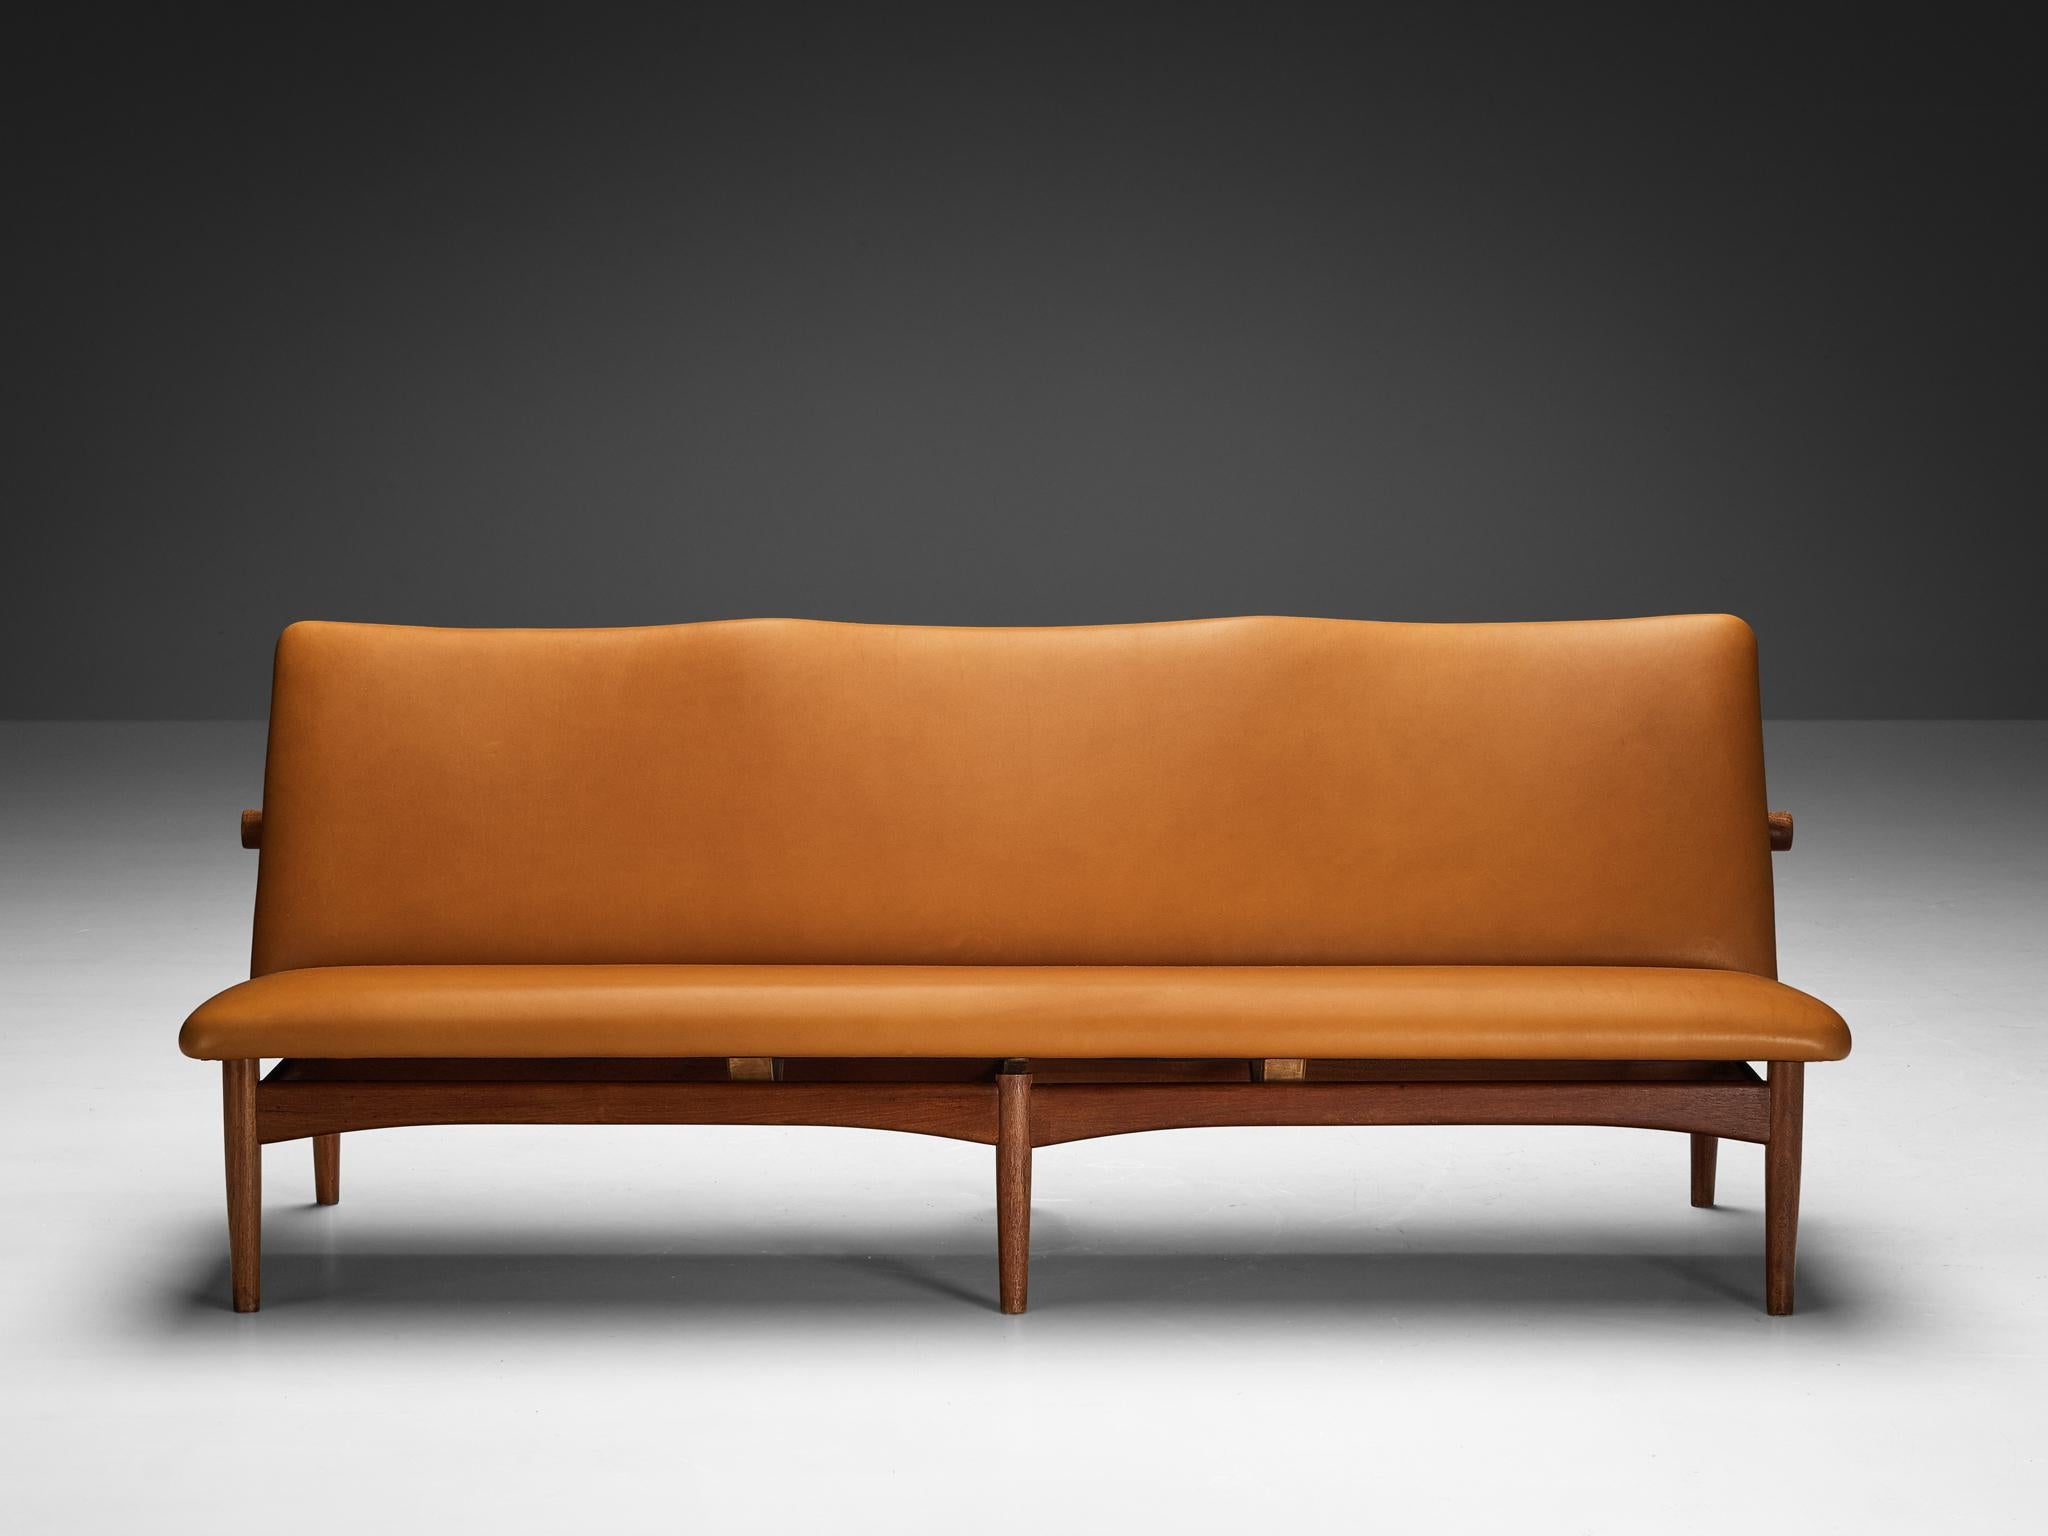 Finn Juhl for France & Søn ‘Japan’ Sofa in Teak and Cognac Leather